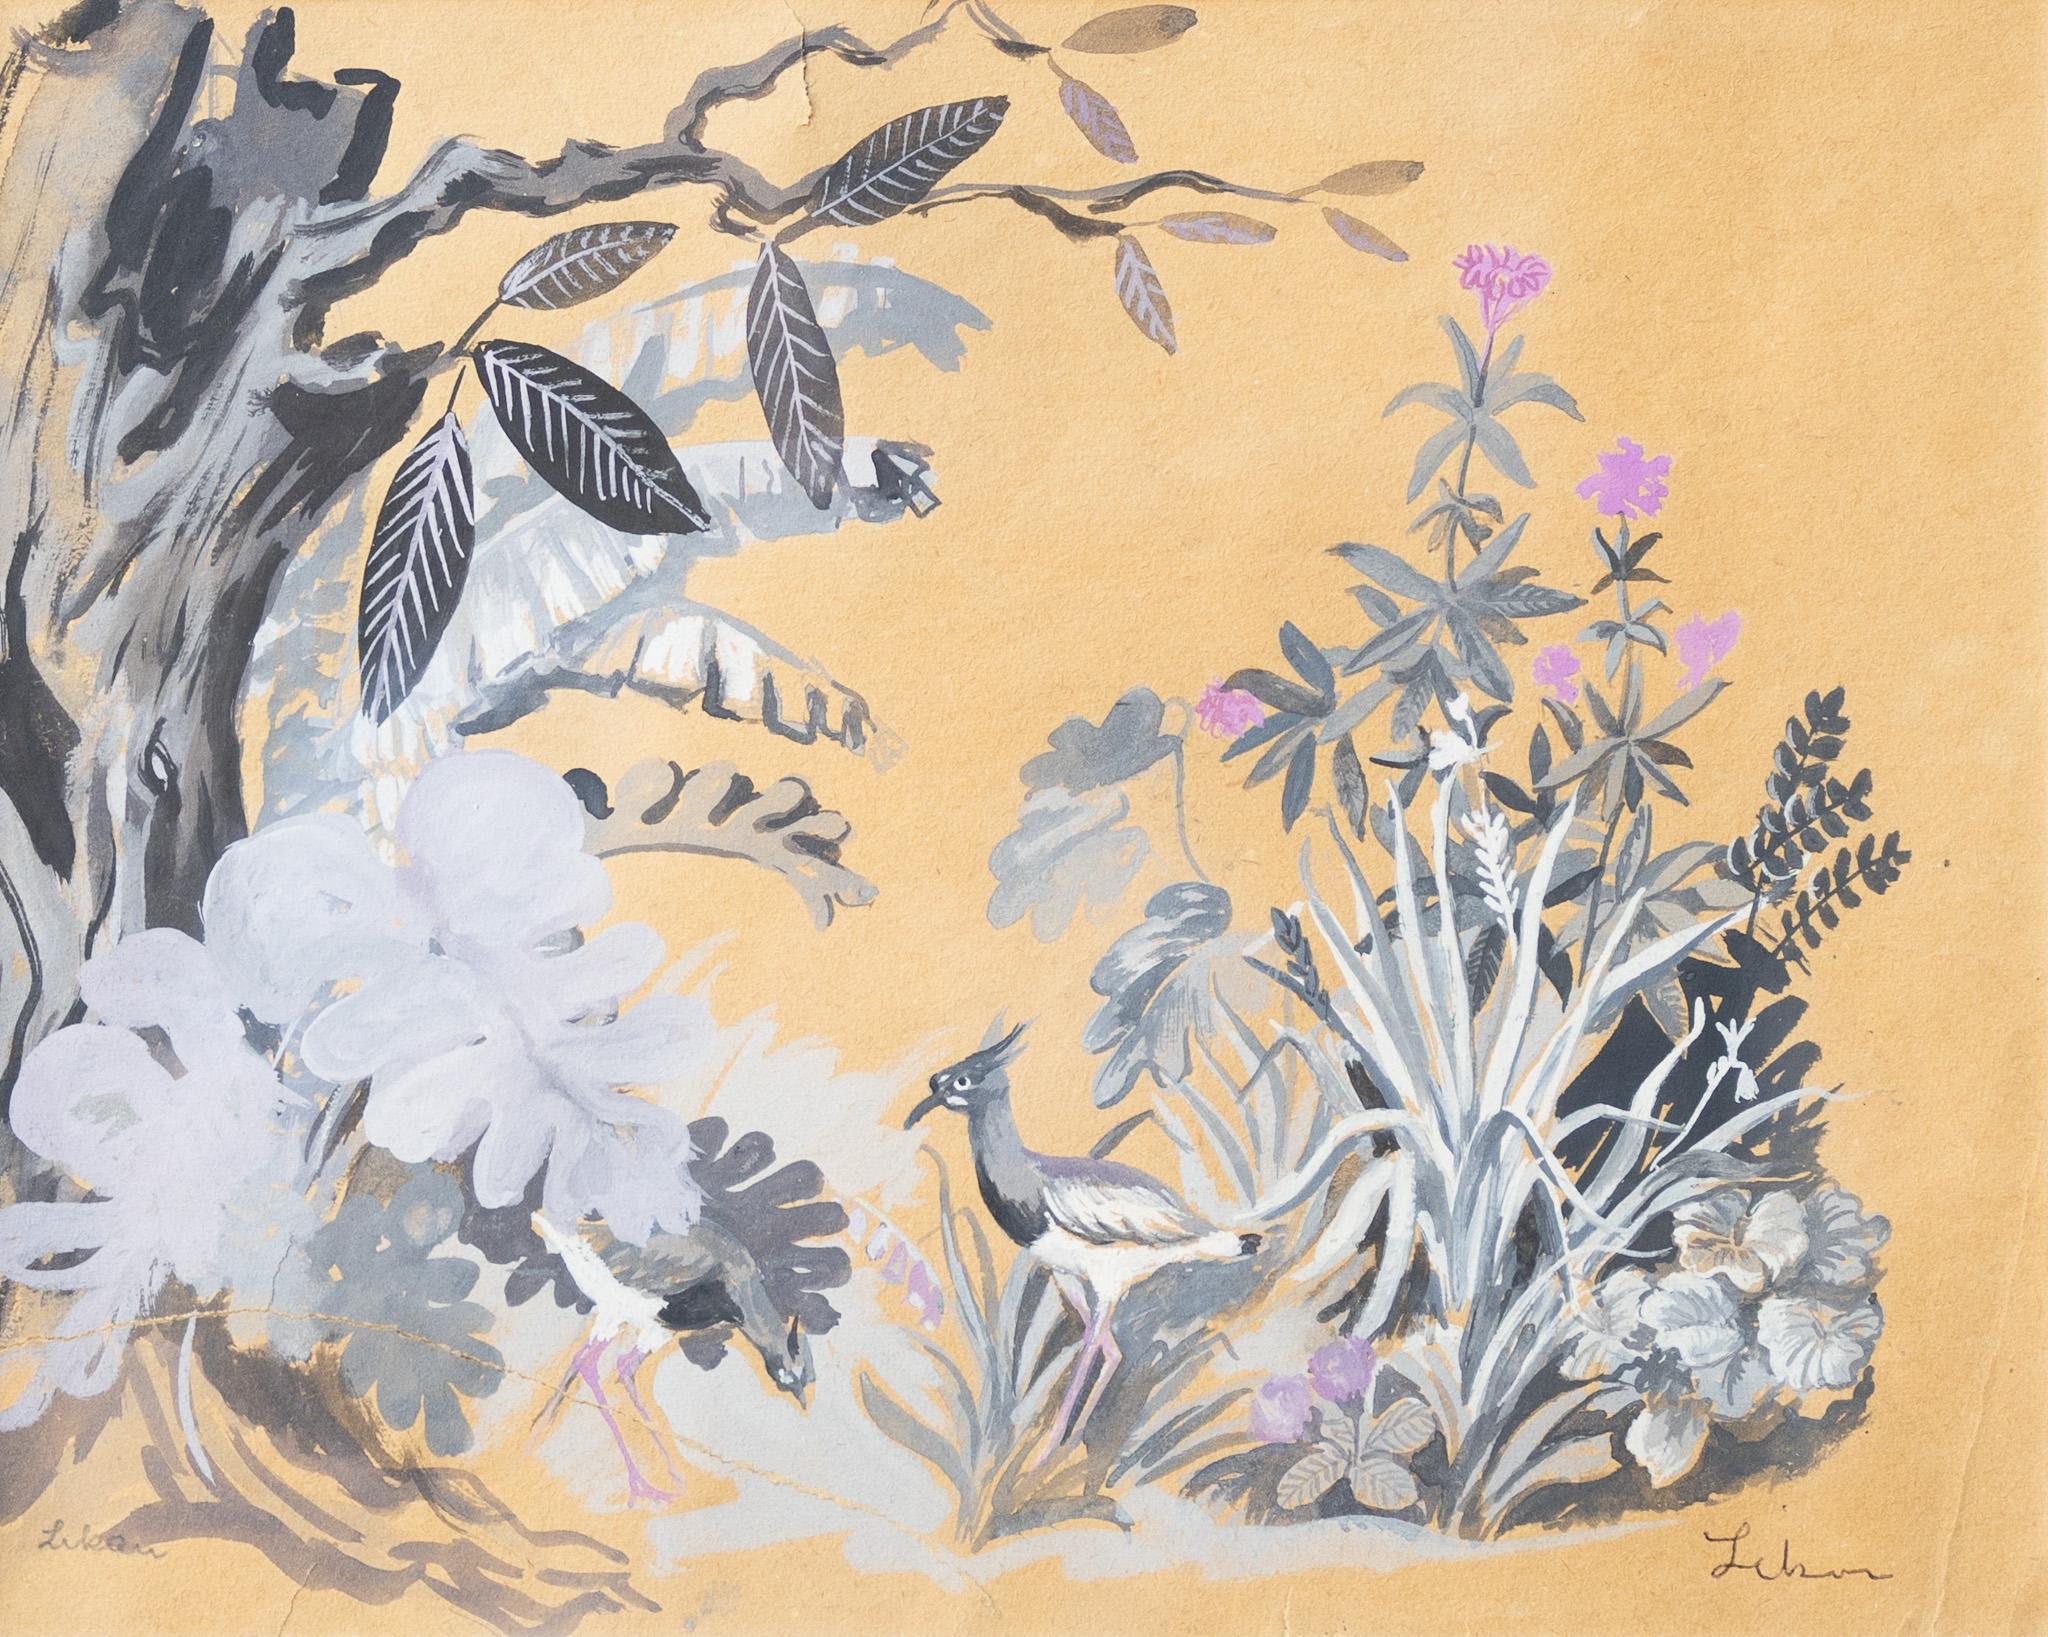 "Tropical Scene in Gold and Purple" Eva Peron Mural Sketch